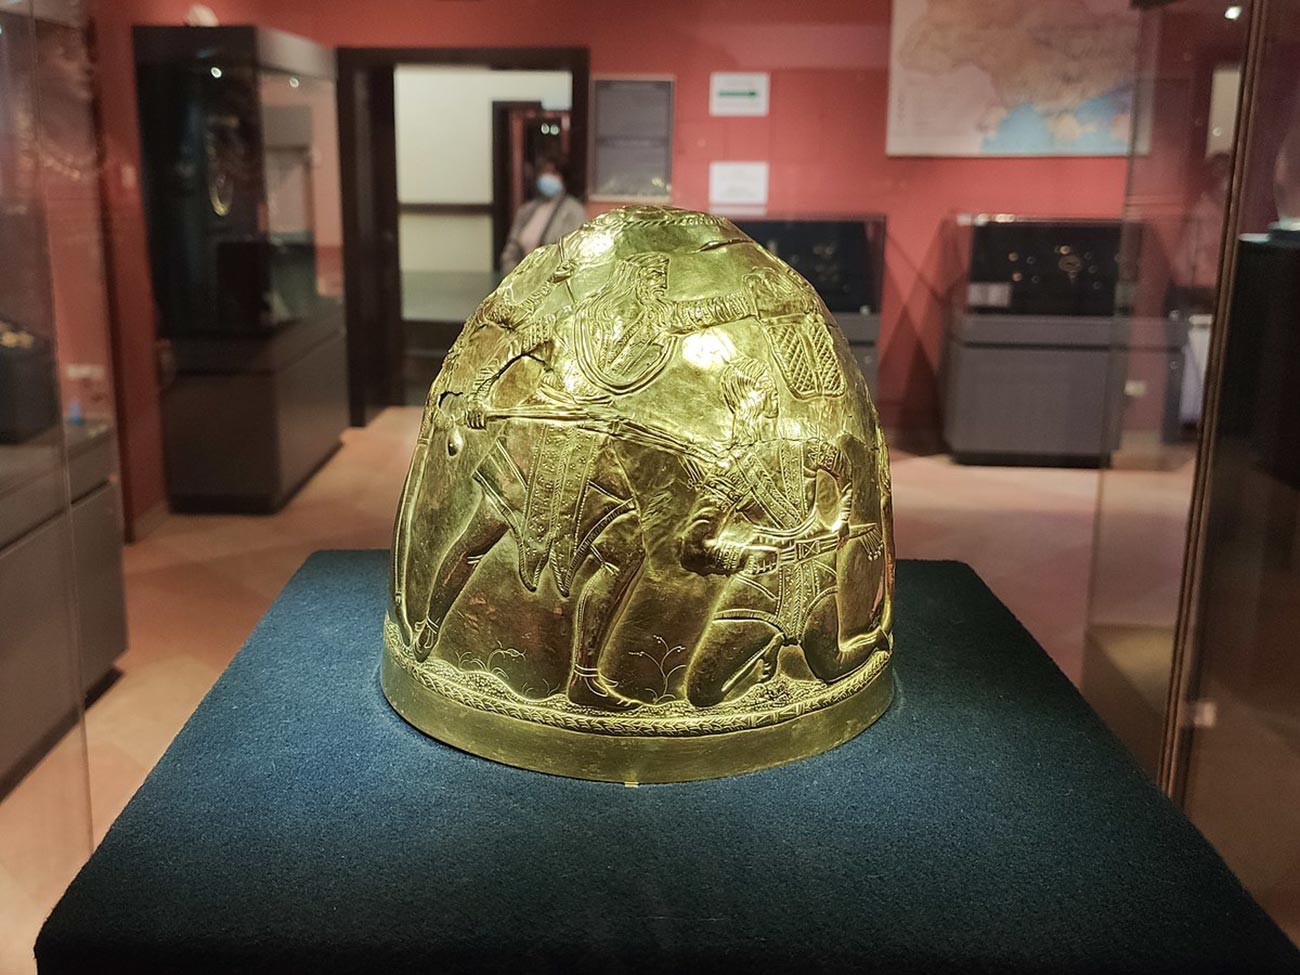 Ceremonial golden helm of a Scythian ruler. 4th century BC. Found in 1988 near Zrubne village, Donetsk oblast, Ukraine. Museum of Historical Treasures of Ukraine exposition.